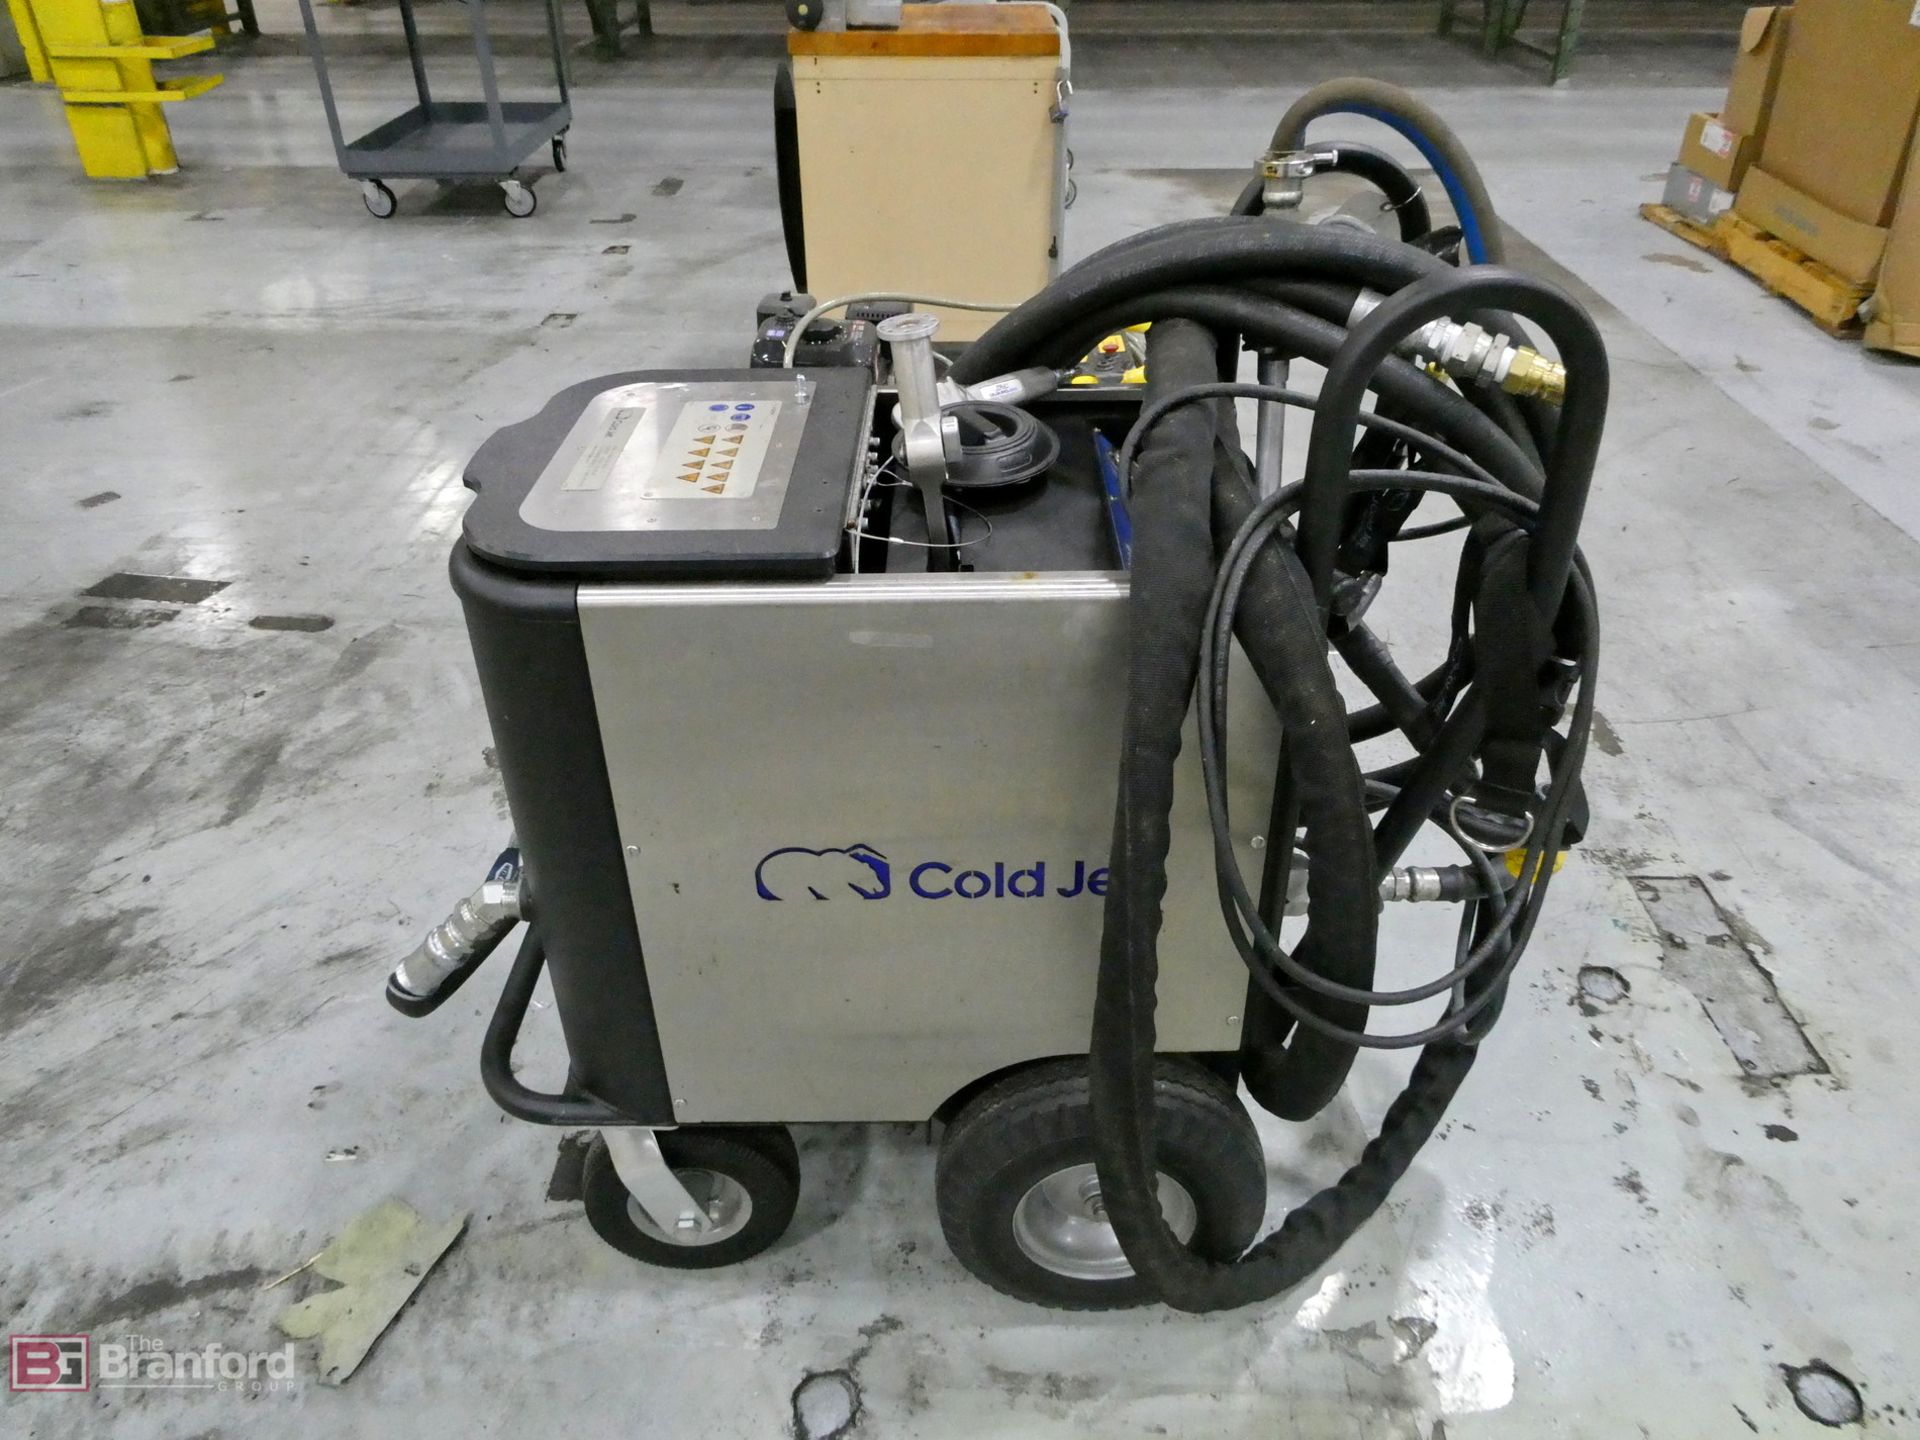 Cool Jet Model Sero 40FP, Full Pressure Dry Ice Cleaning Machine